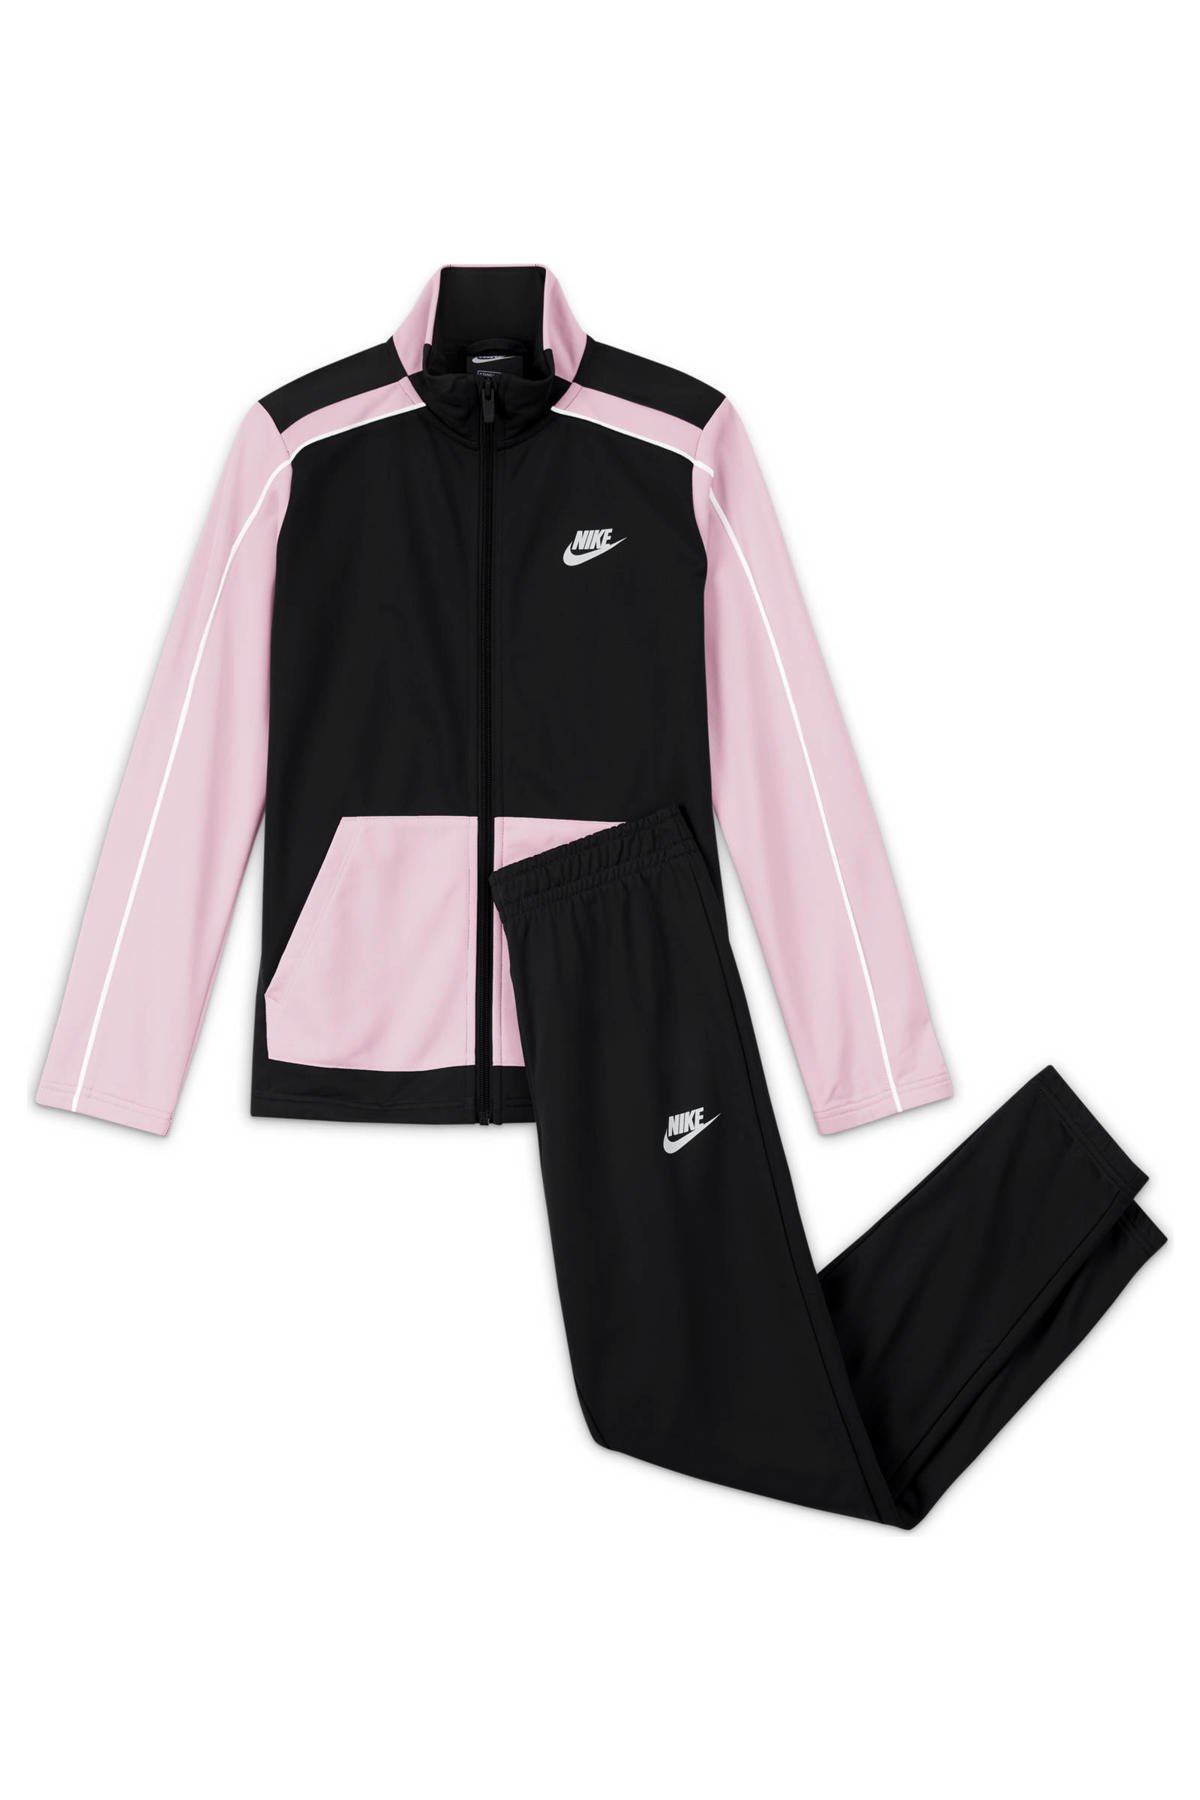 Nike zwart/roze | wehkamp